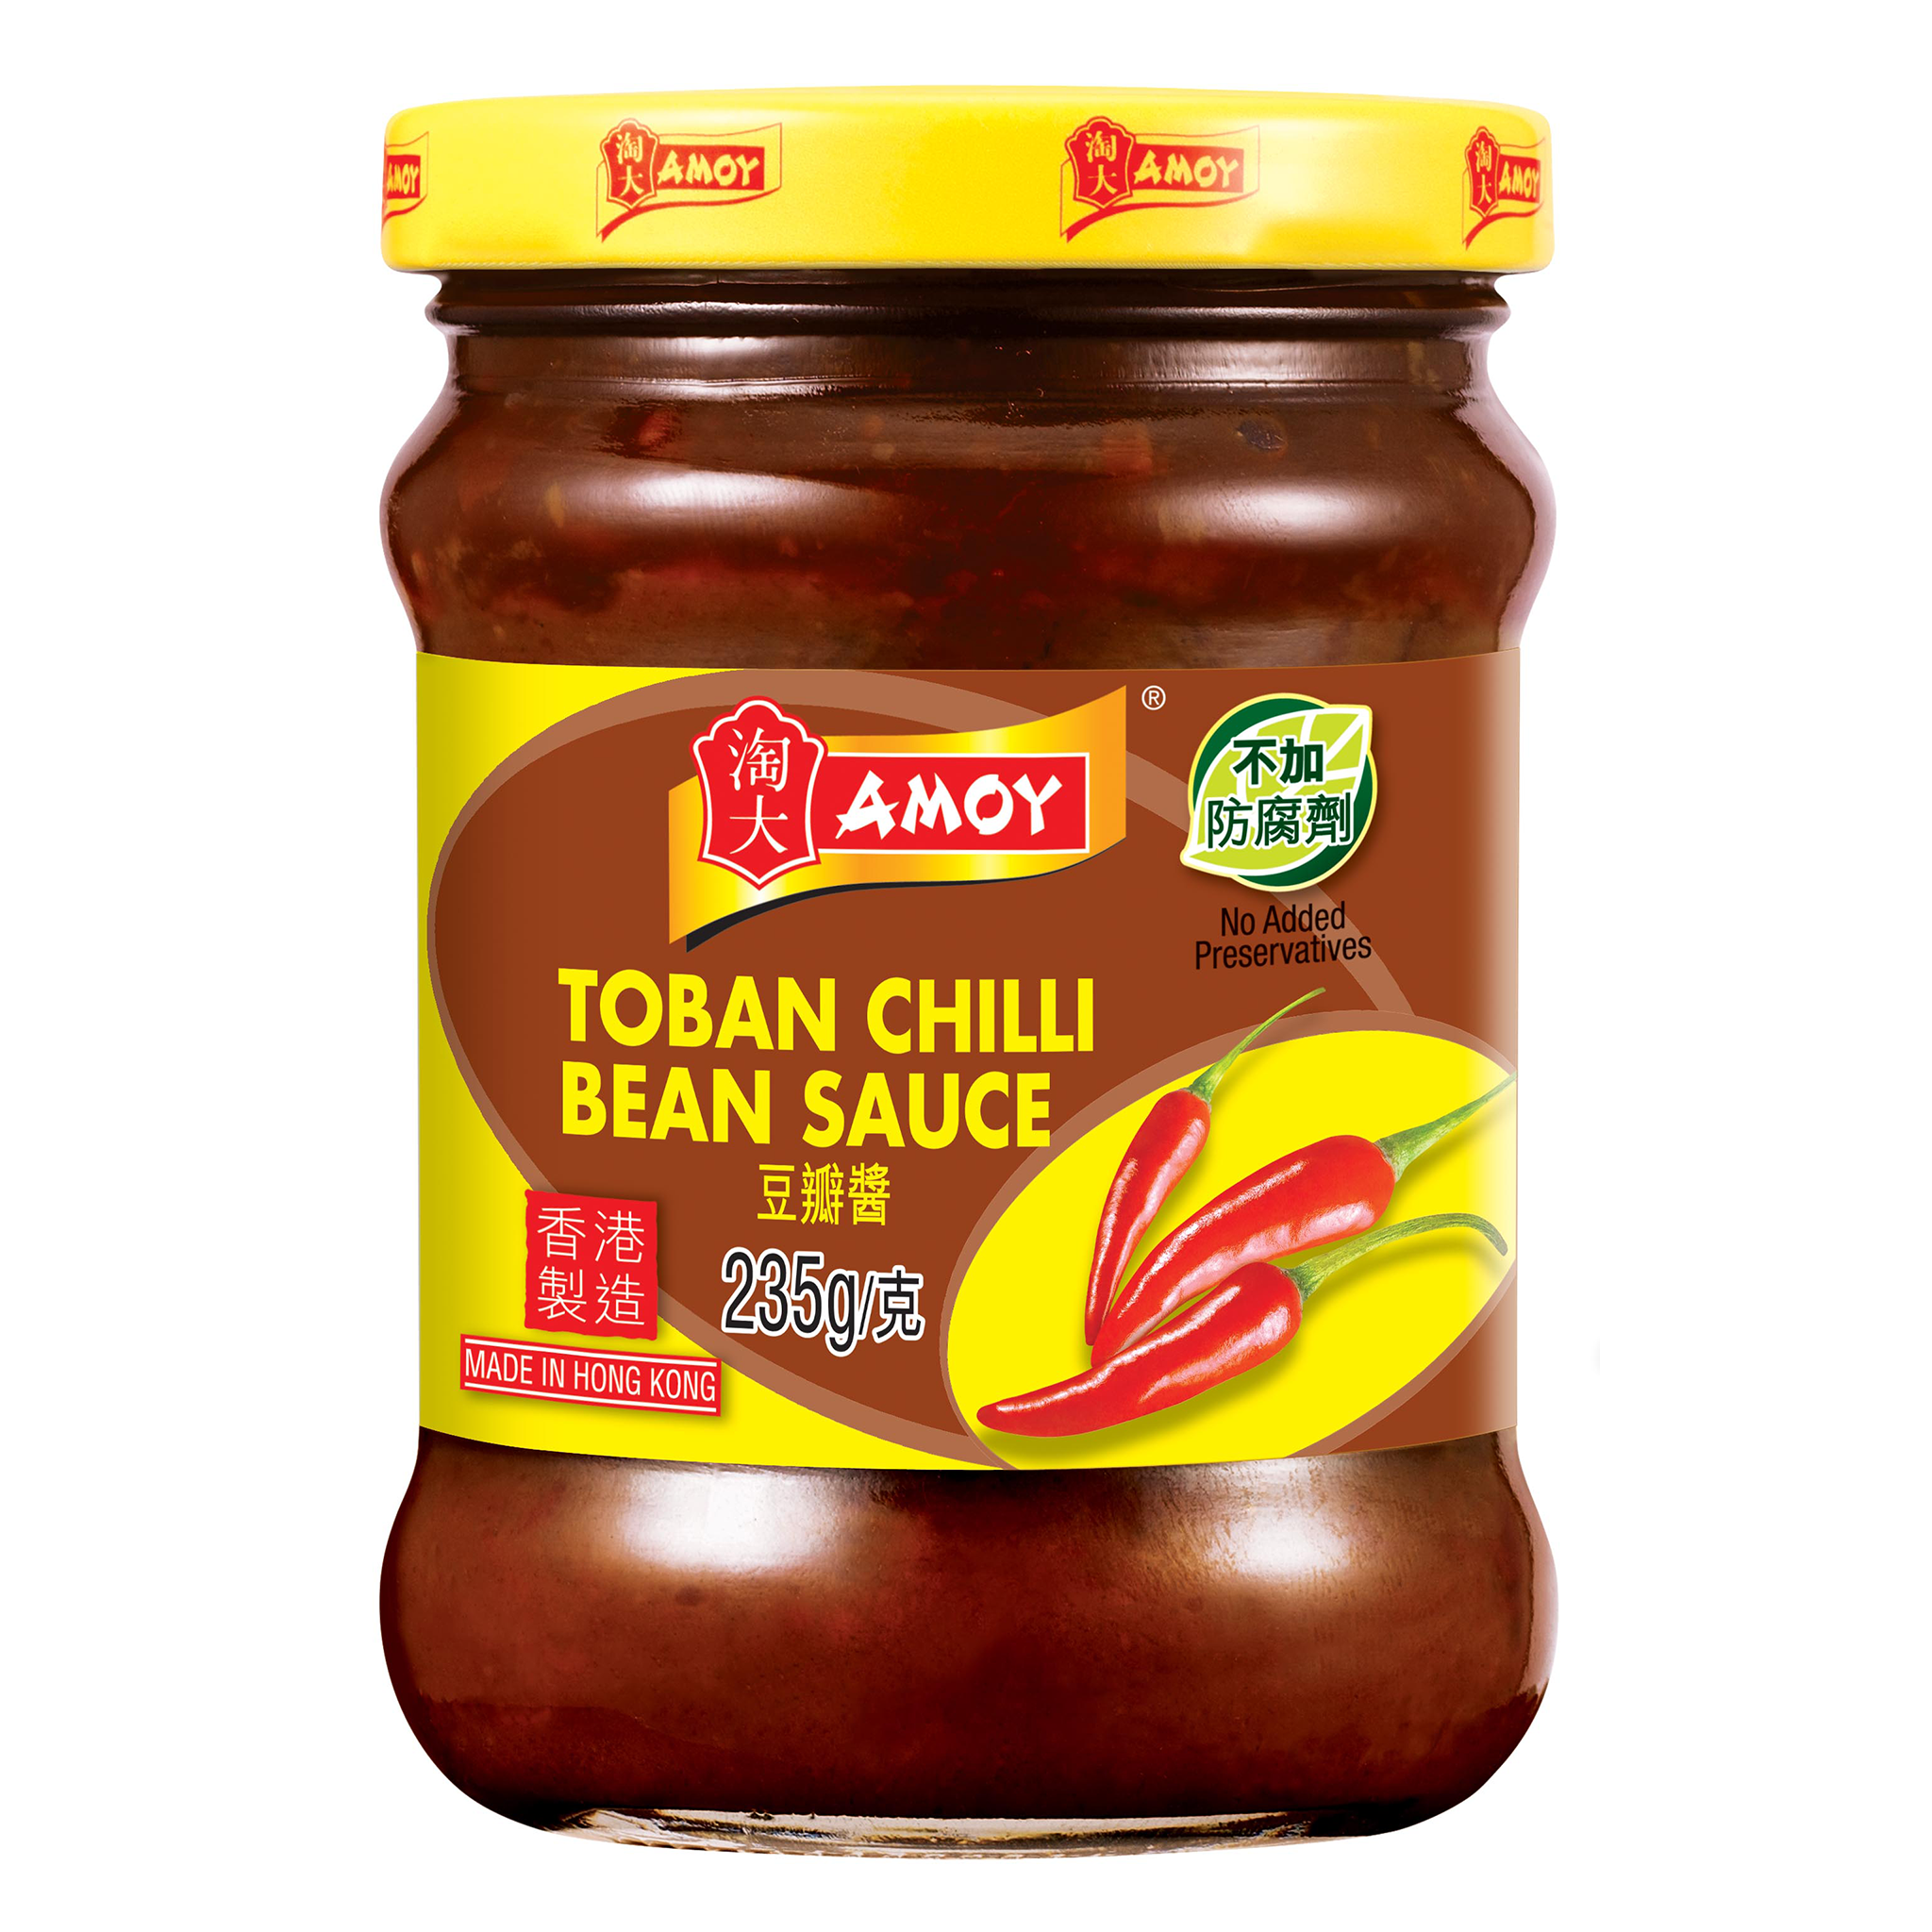 Toban Chilli Bean Sauce 235g by Amoy